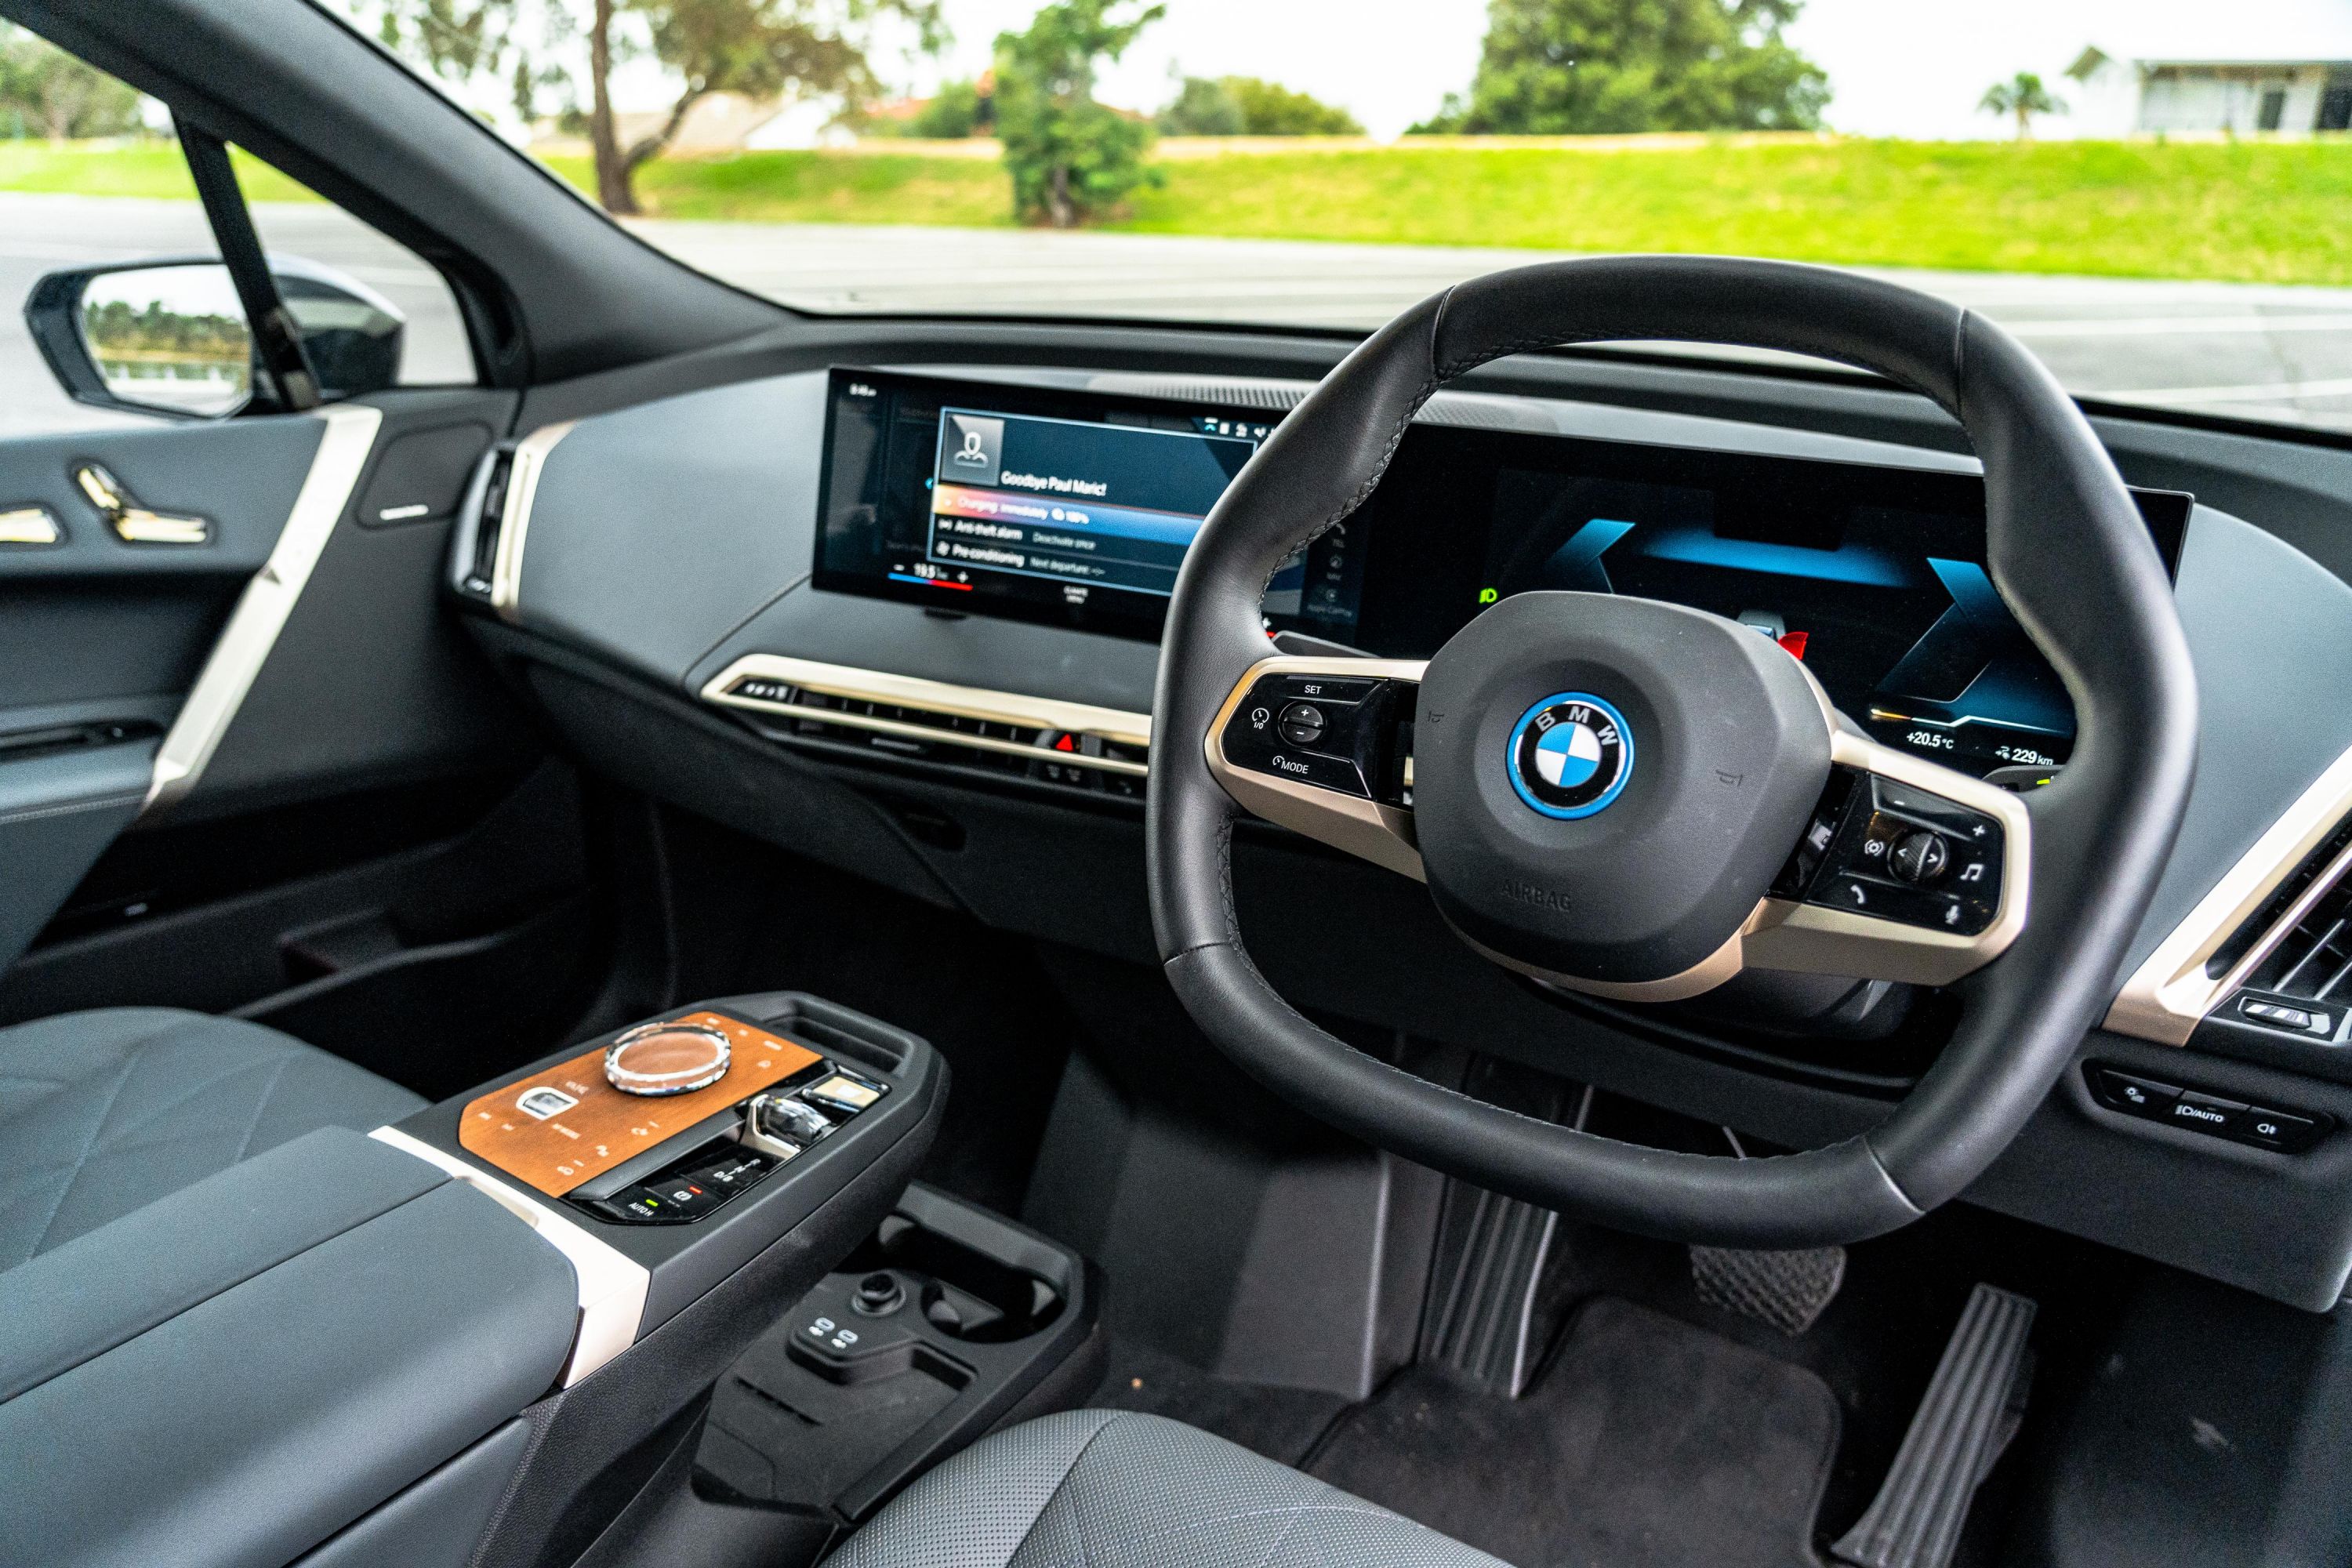 BMW iX has special 'self-healing' sensor-friendly grille, high-tech roof